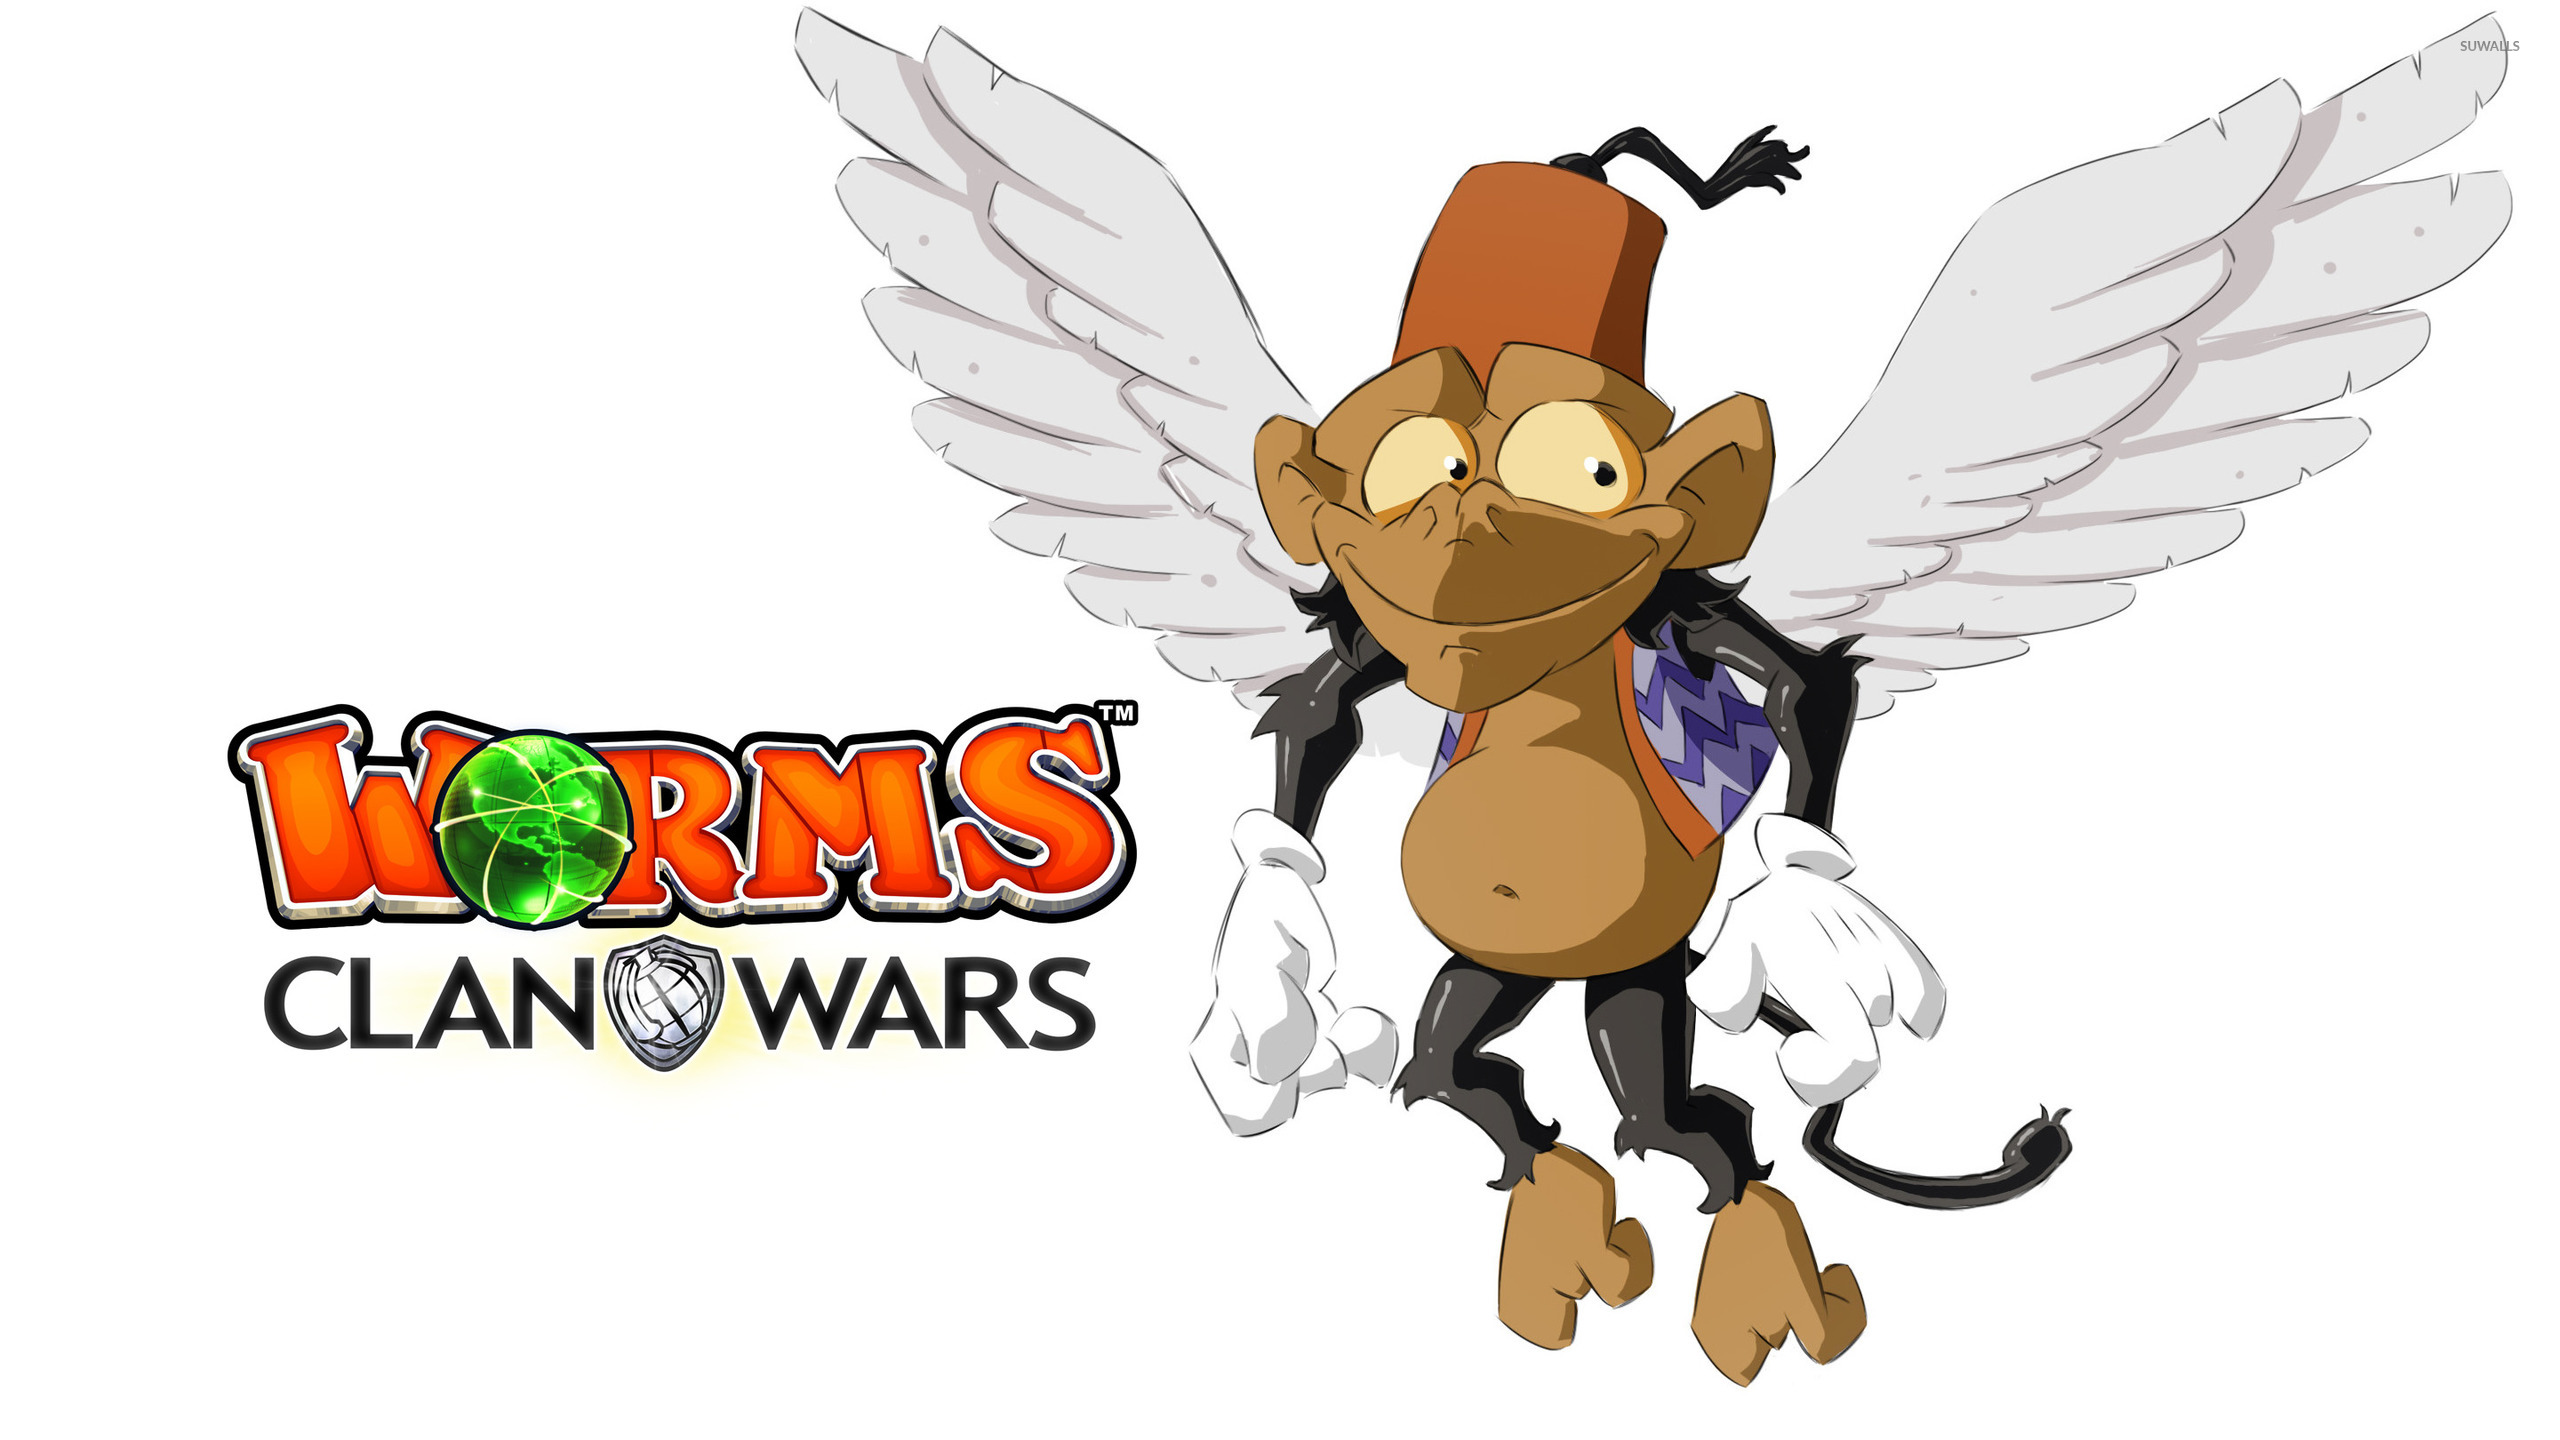 Worms clan. Worms Clan Wars. Клан ВАРС. Gameplay worms: Clan Wars.